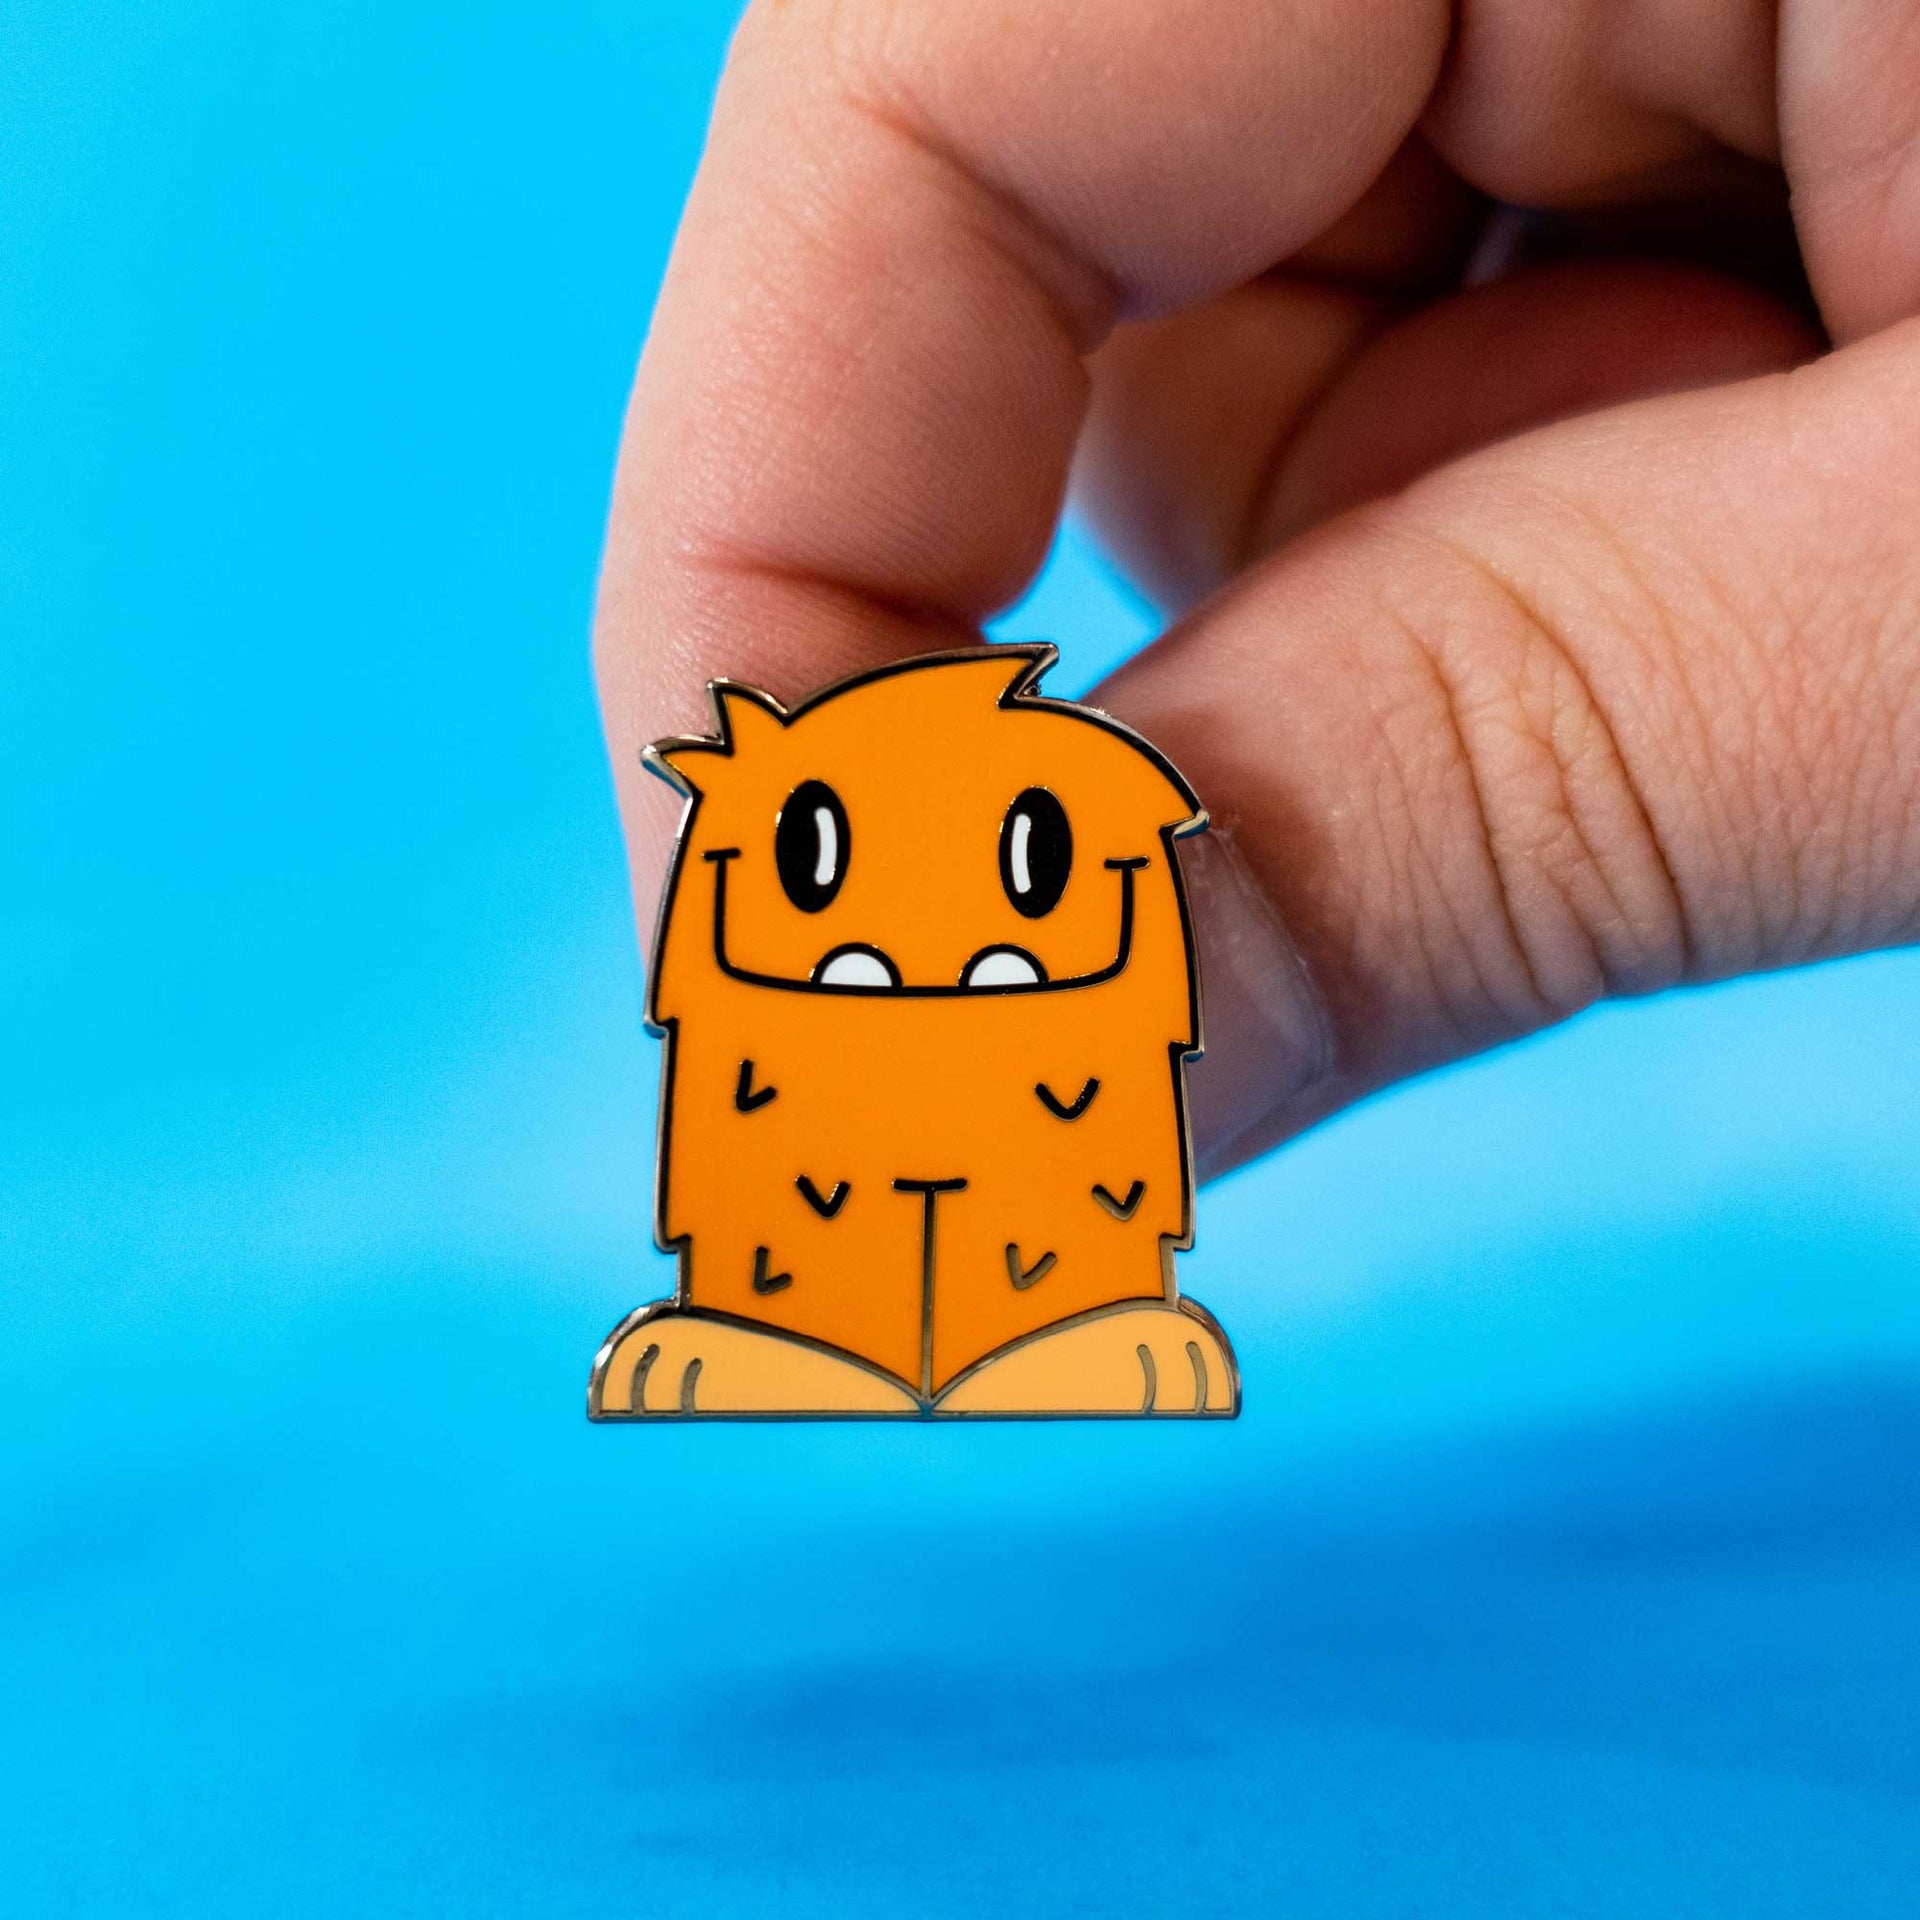 reggie the cute little monster enamel pin in hand